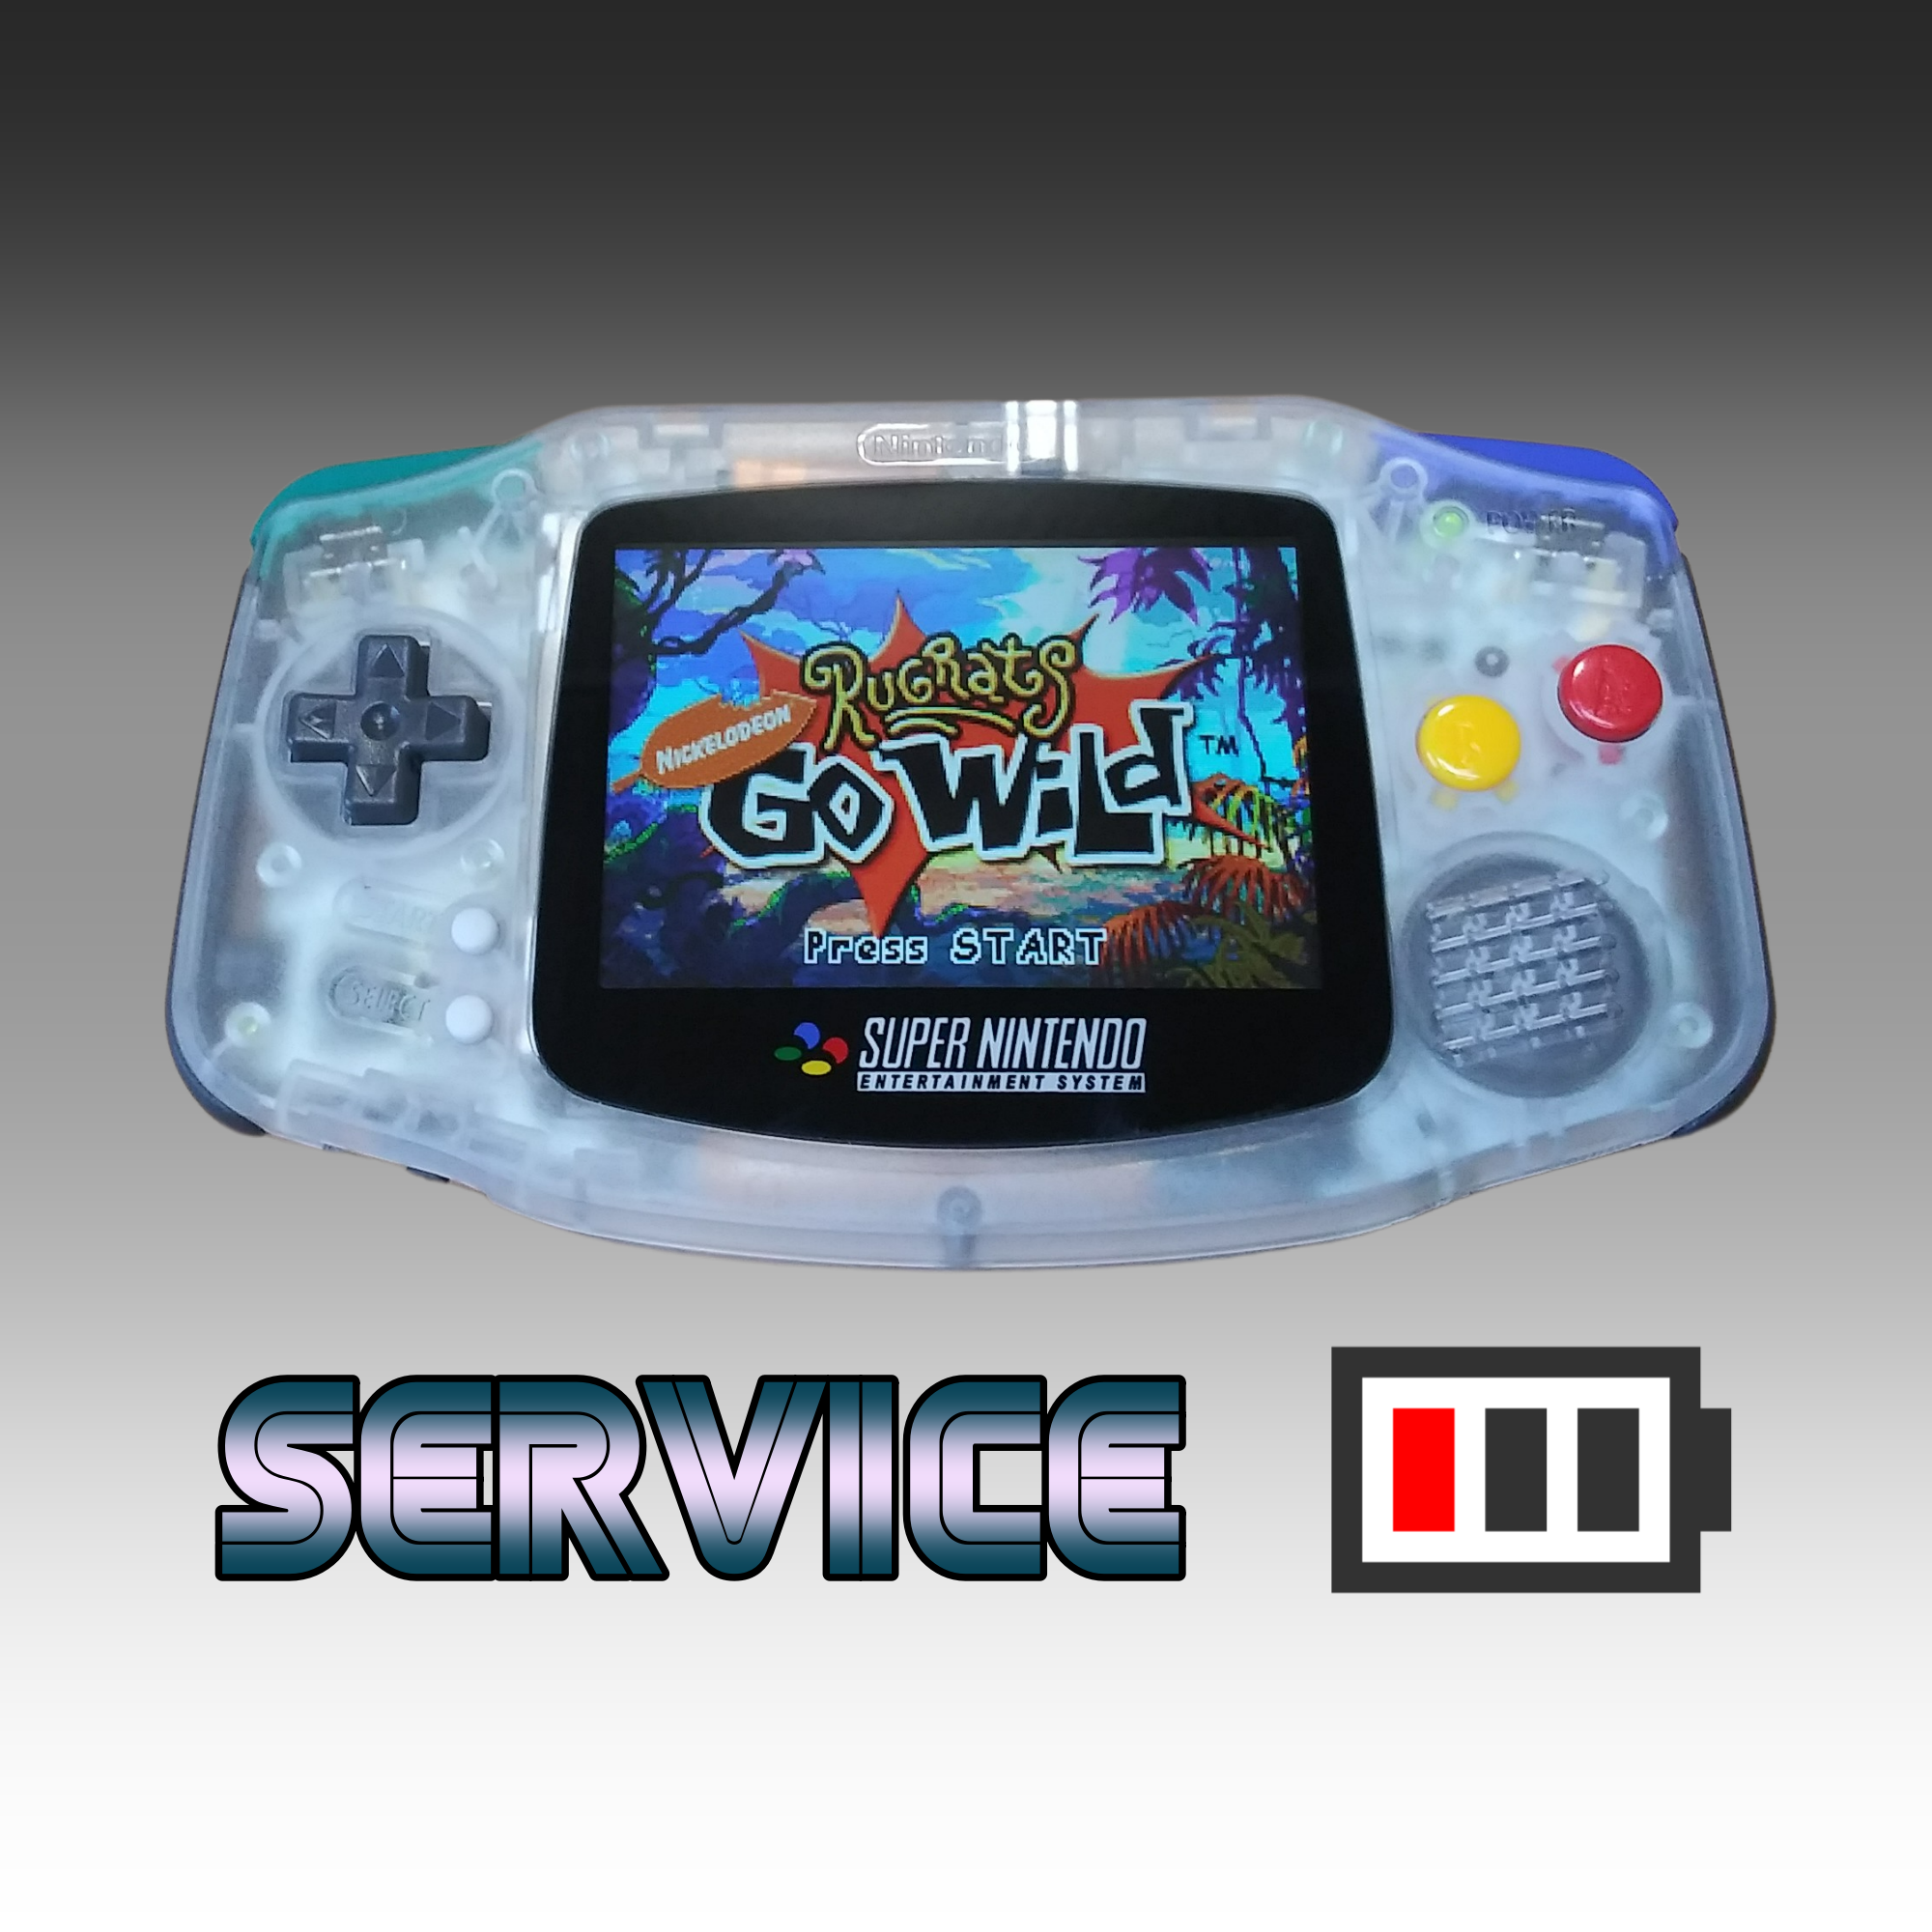 Buy Repairs Game Boy Advance SP Repairs: LCD Screen Replacement Service